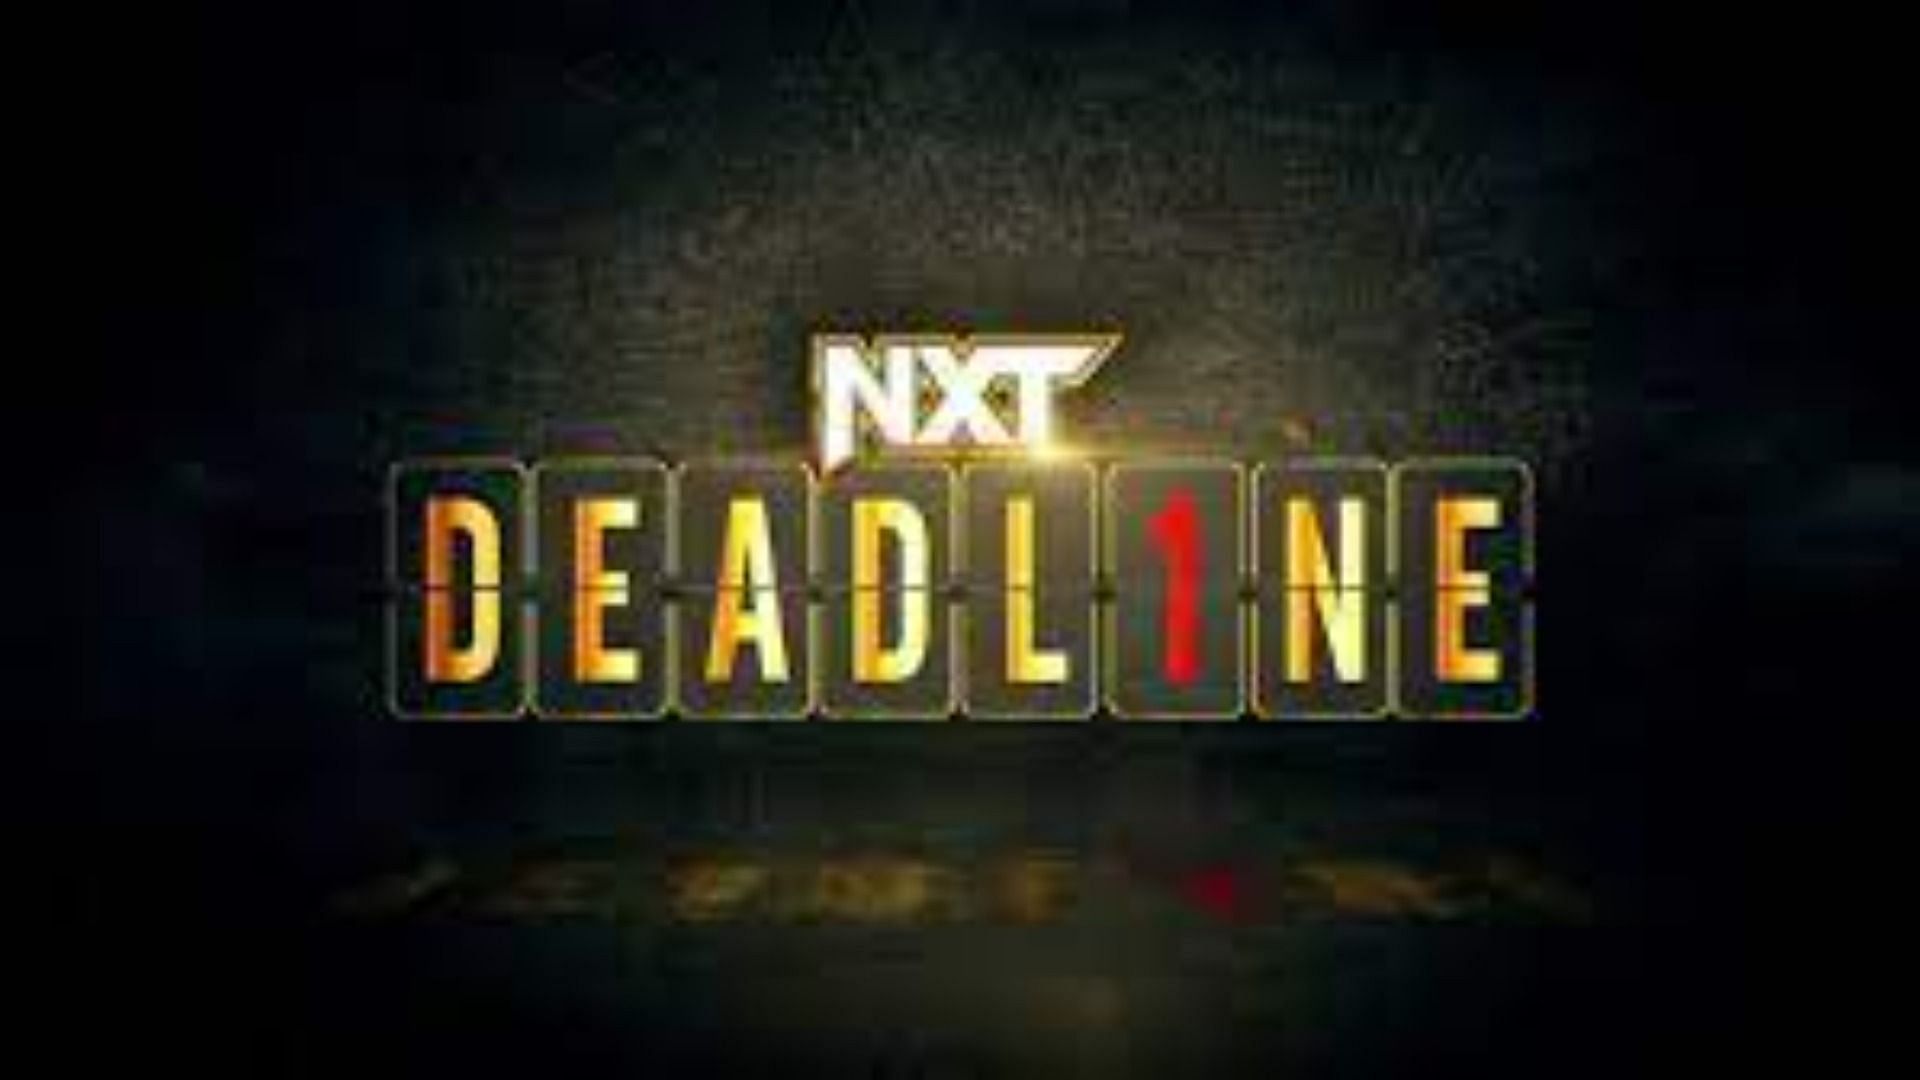 Updated NXT Deadline 2022 match card after WWE NXT Shawn Michaels